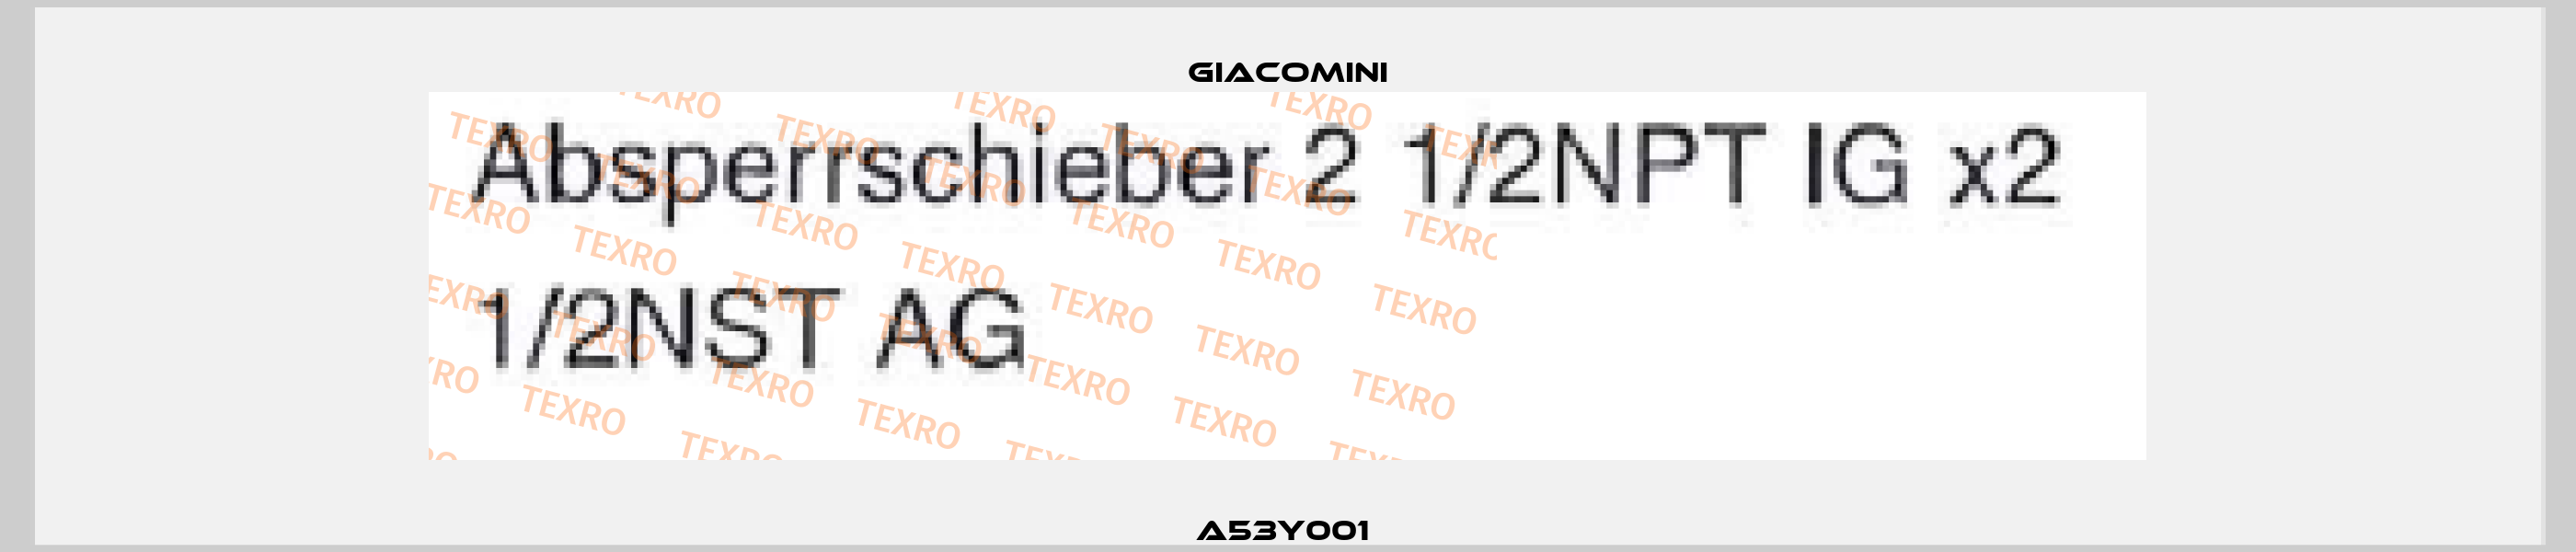 A53Y001  Giacomini